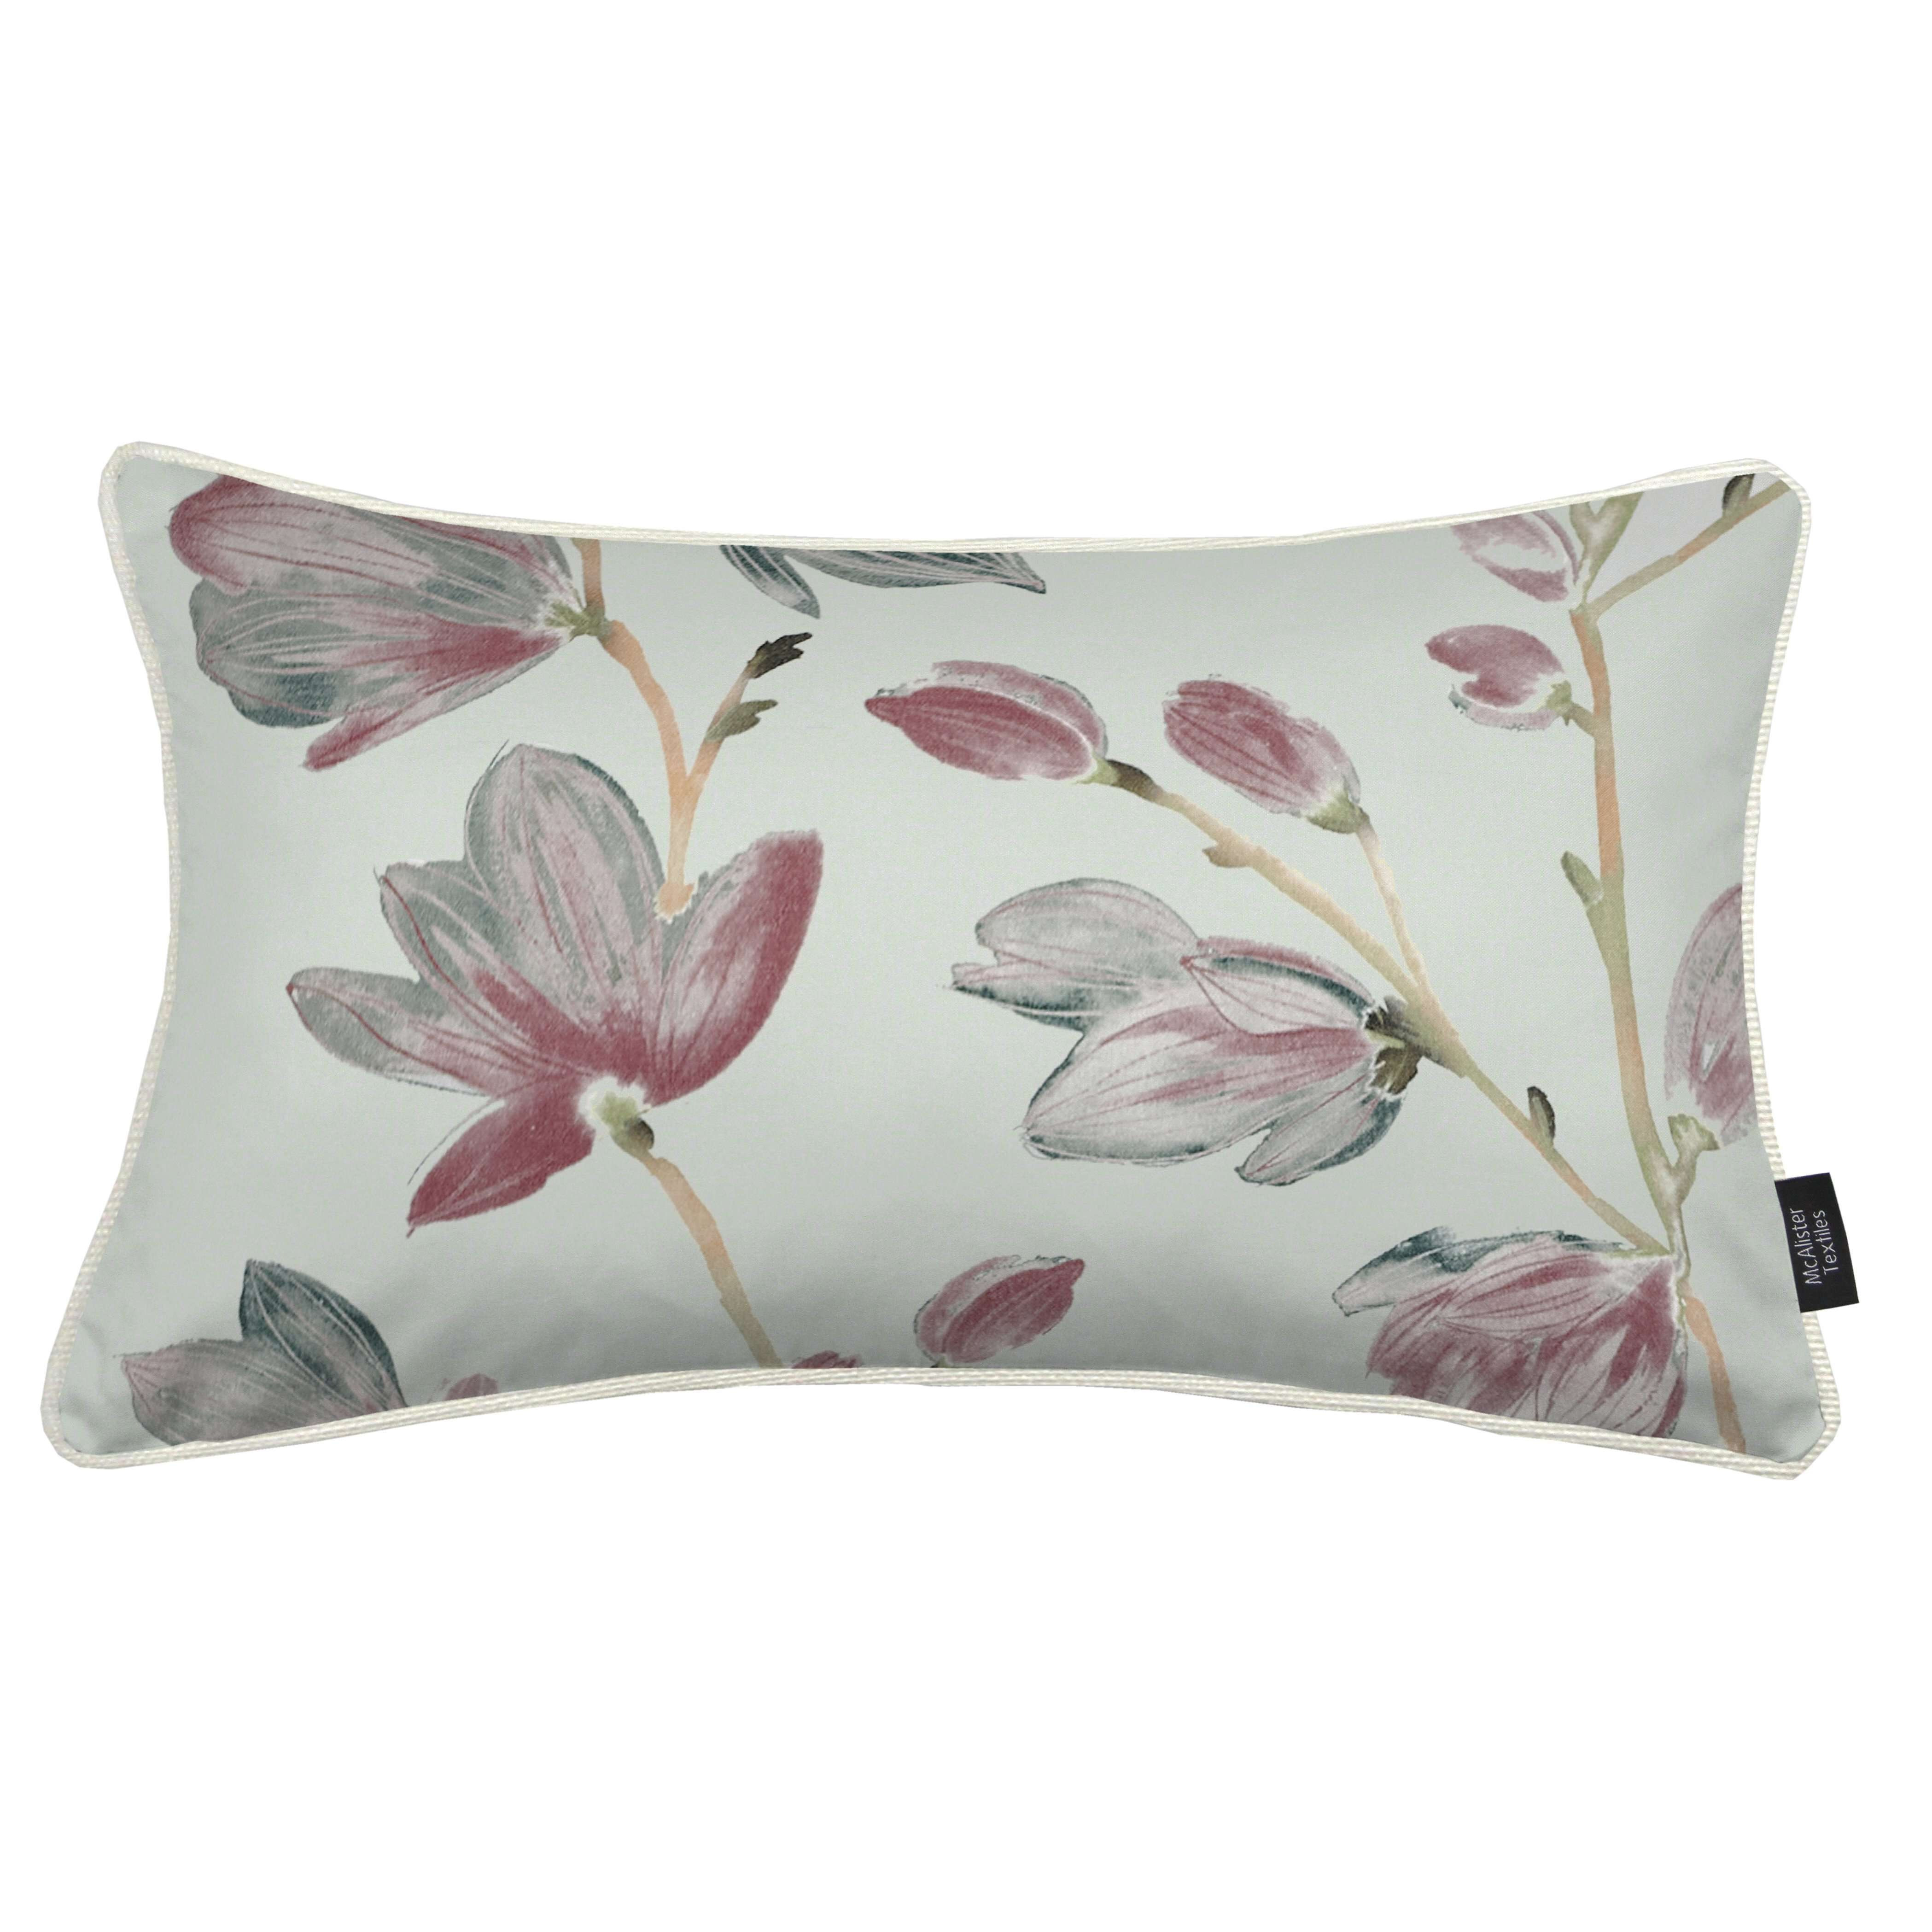 Magnolia Rose Floral Cotton Print Pillows, Cover Only / 60cm x 40cm